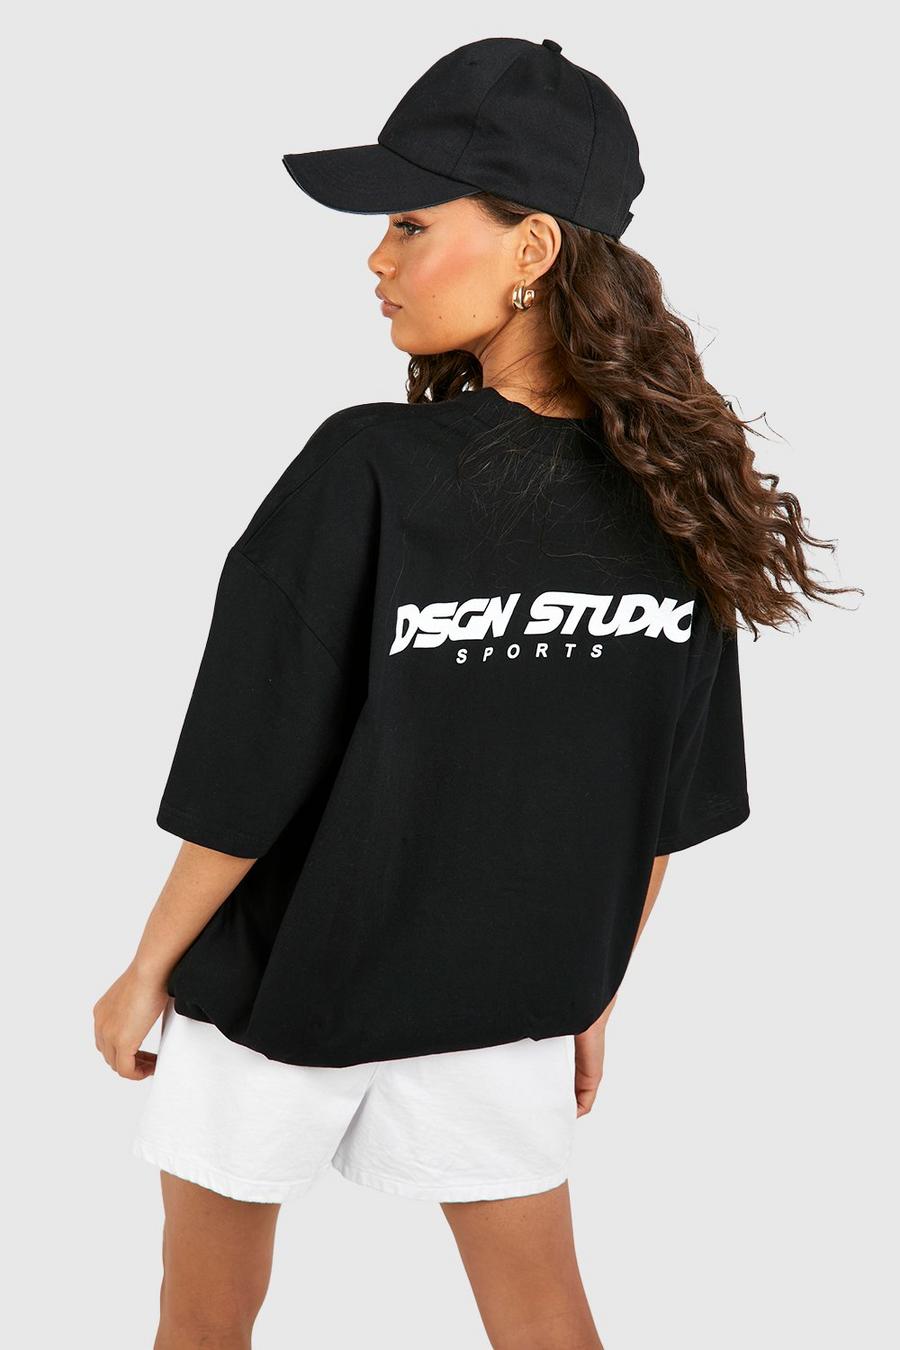 T-shirt oversize con slogan Dsgn Studio Sports, Black image number 1